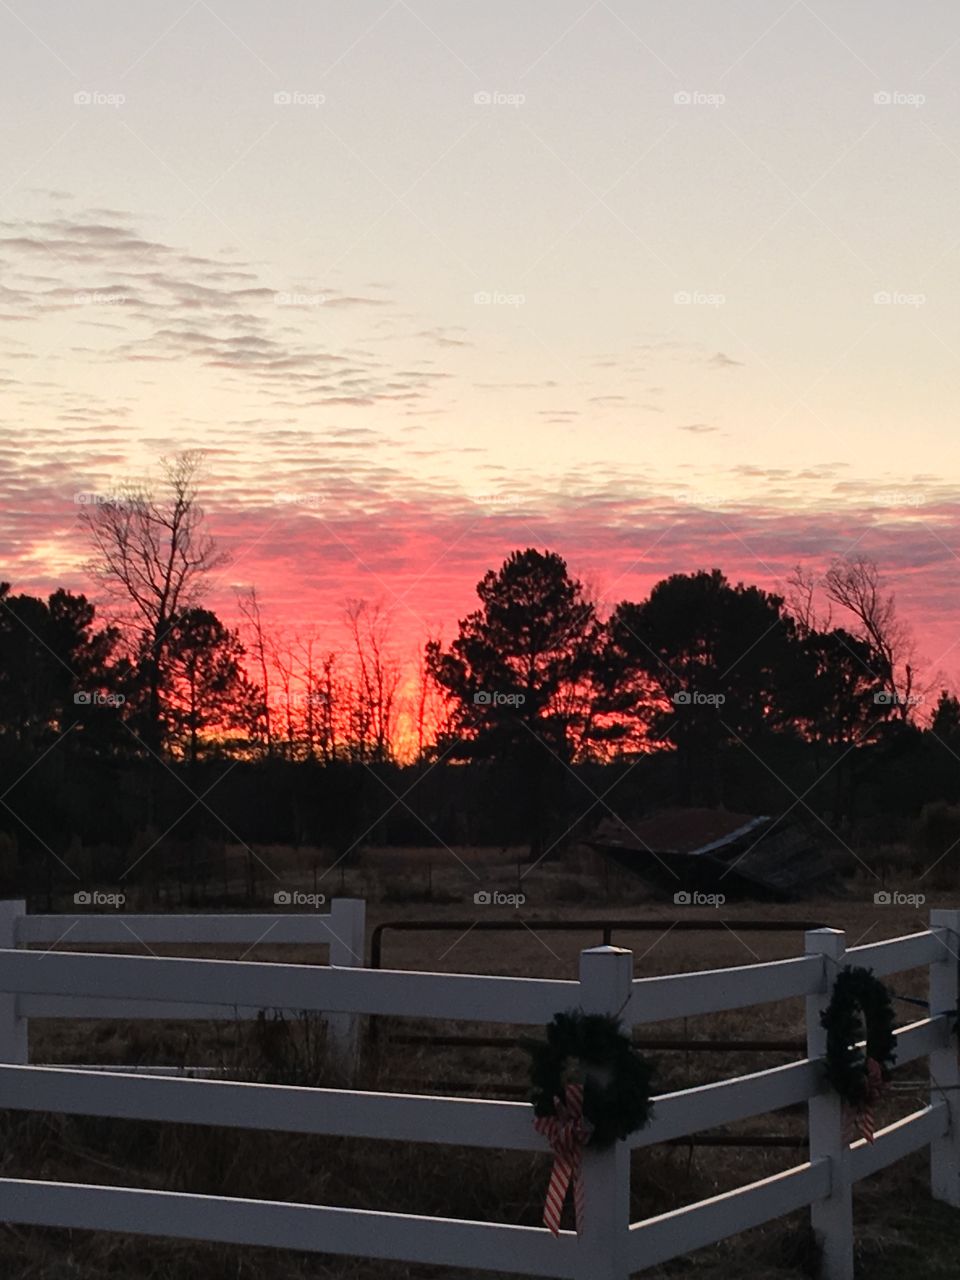 Sunset on the farm 